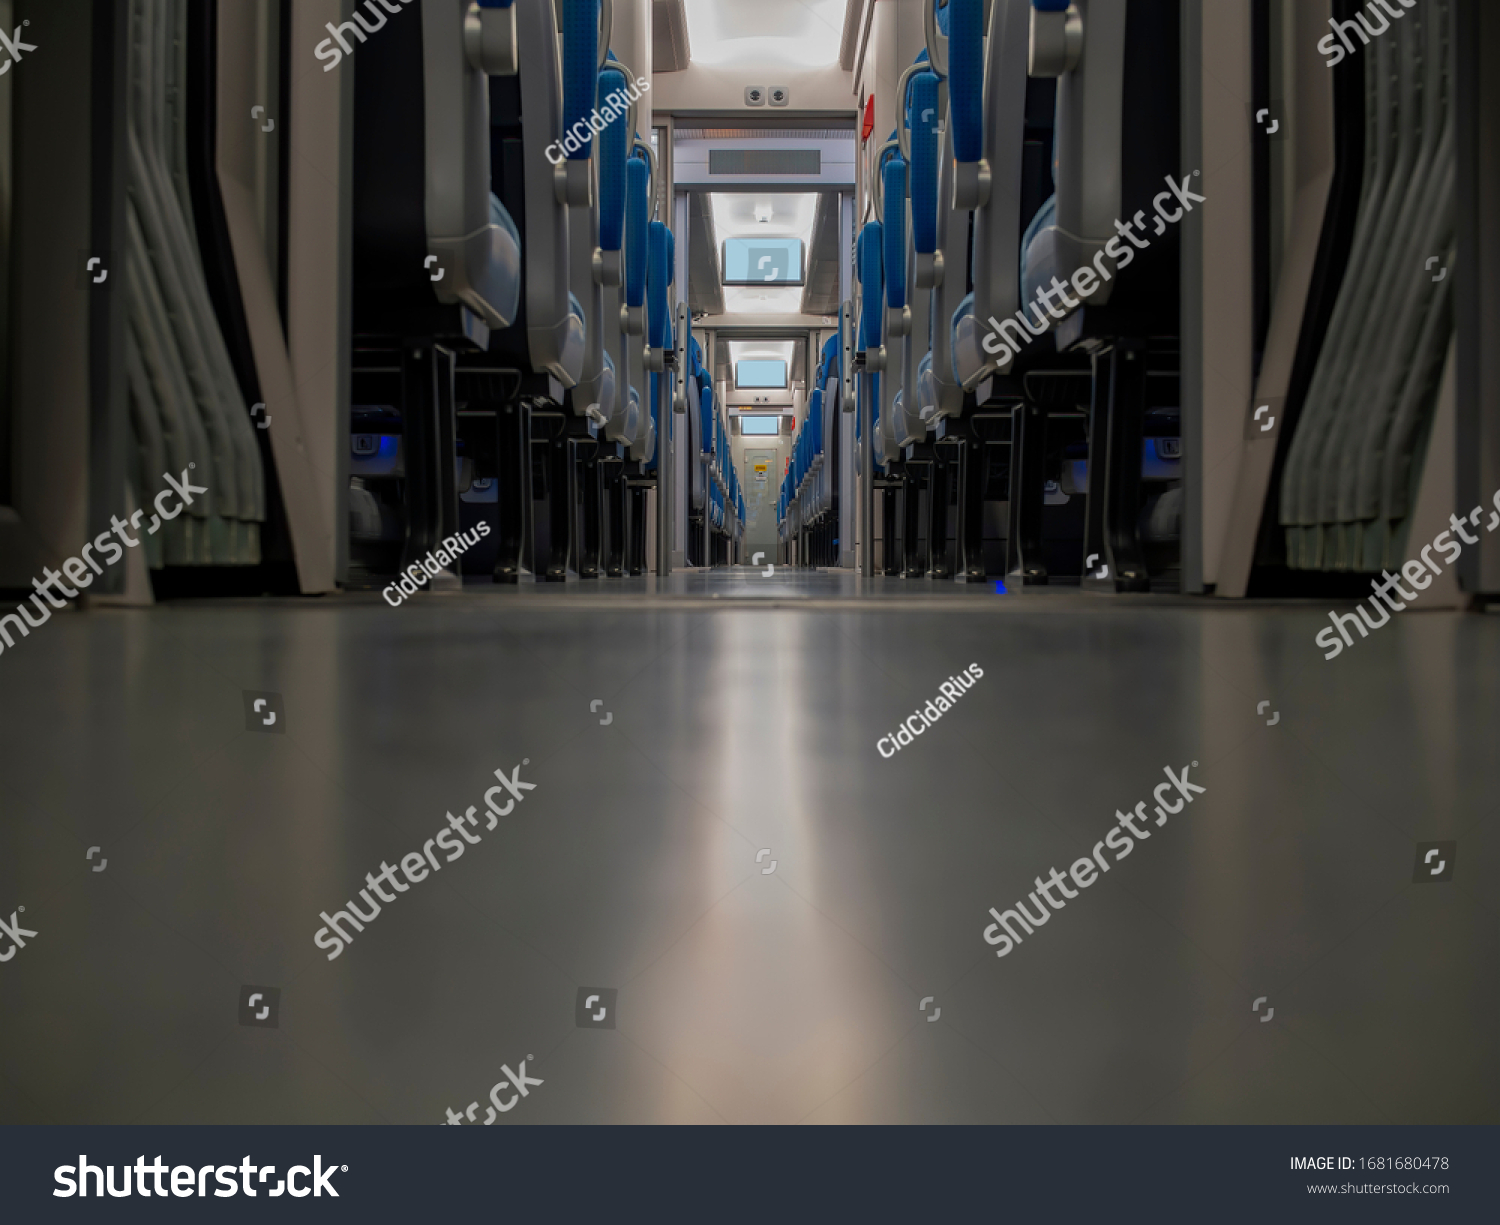 Train interior view empty seats - StockPhotography